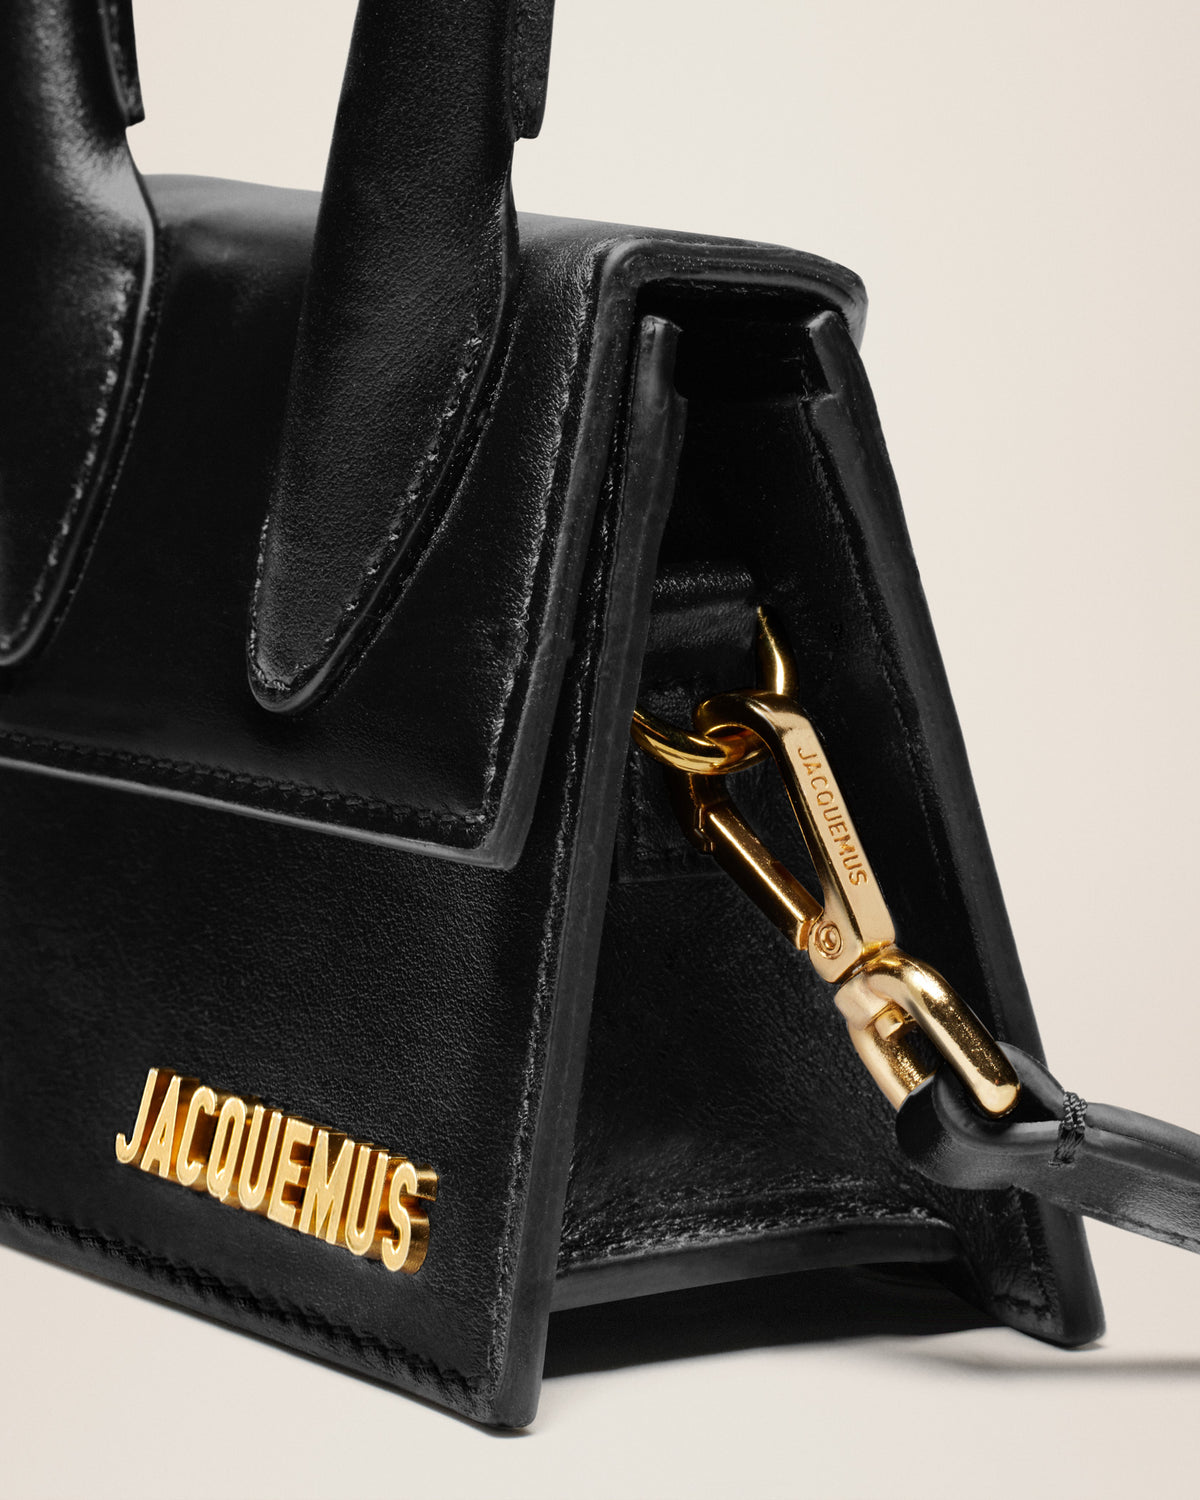 Jacquemus Black Le Chiquito Bag